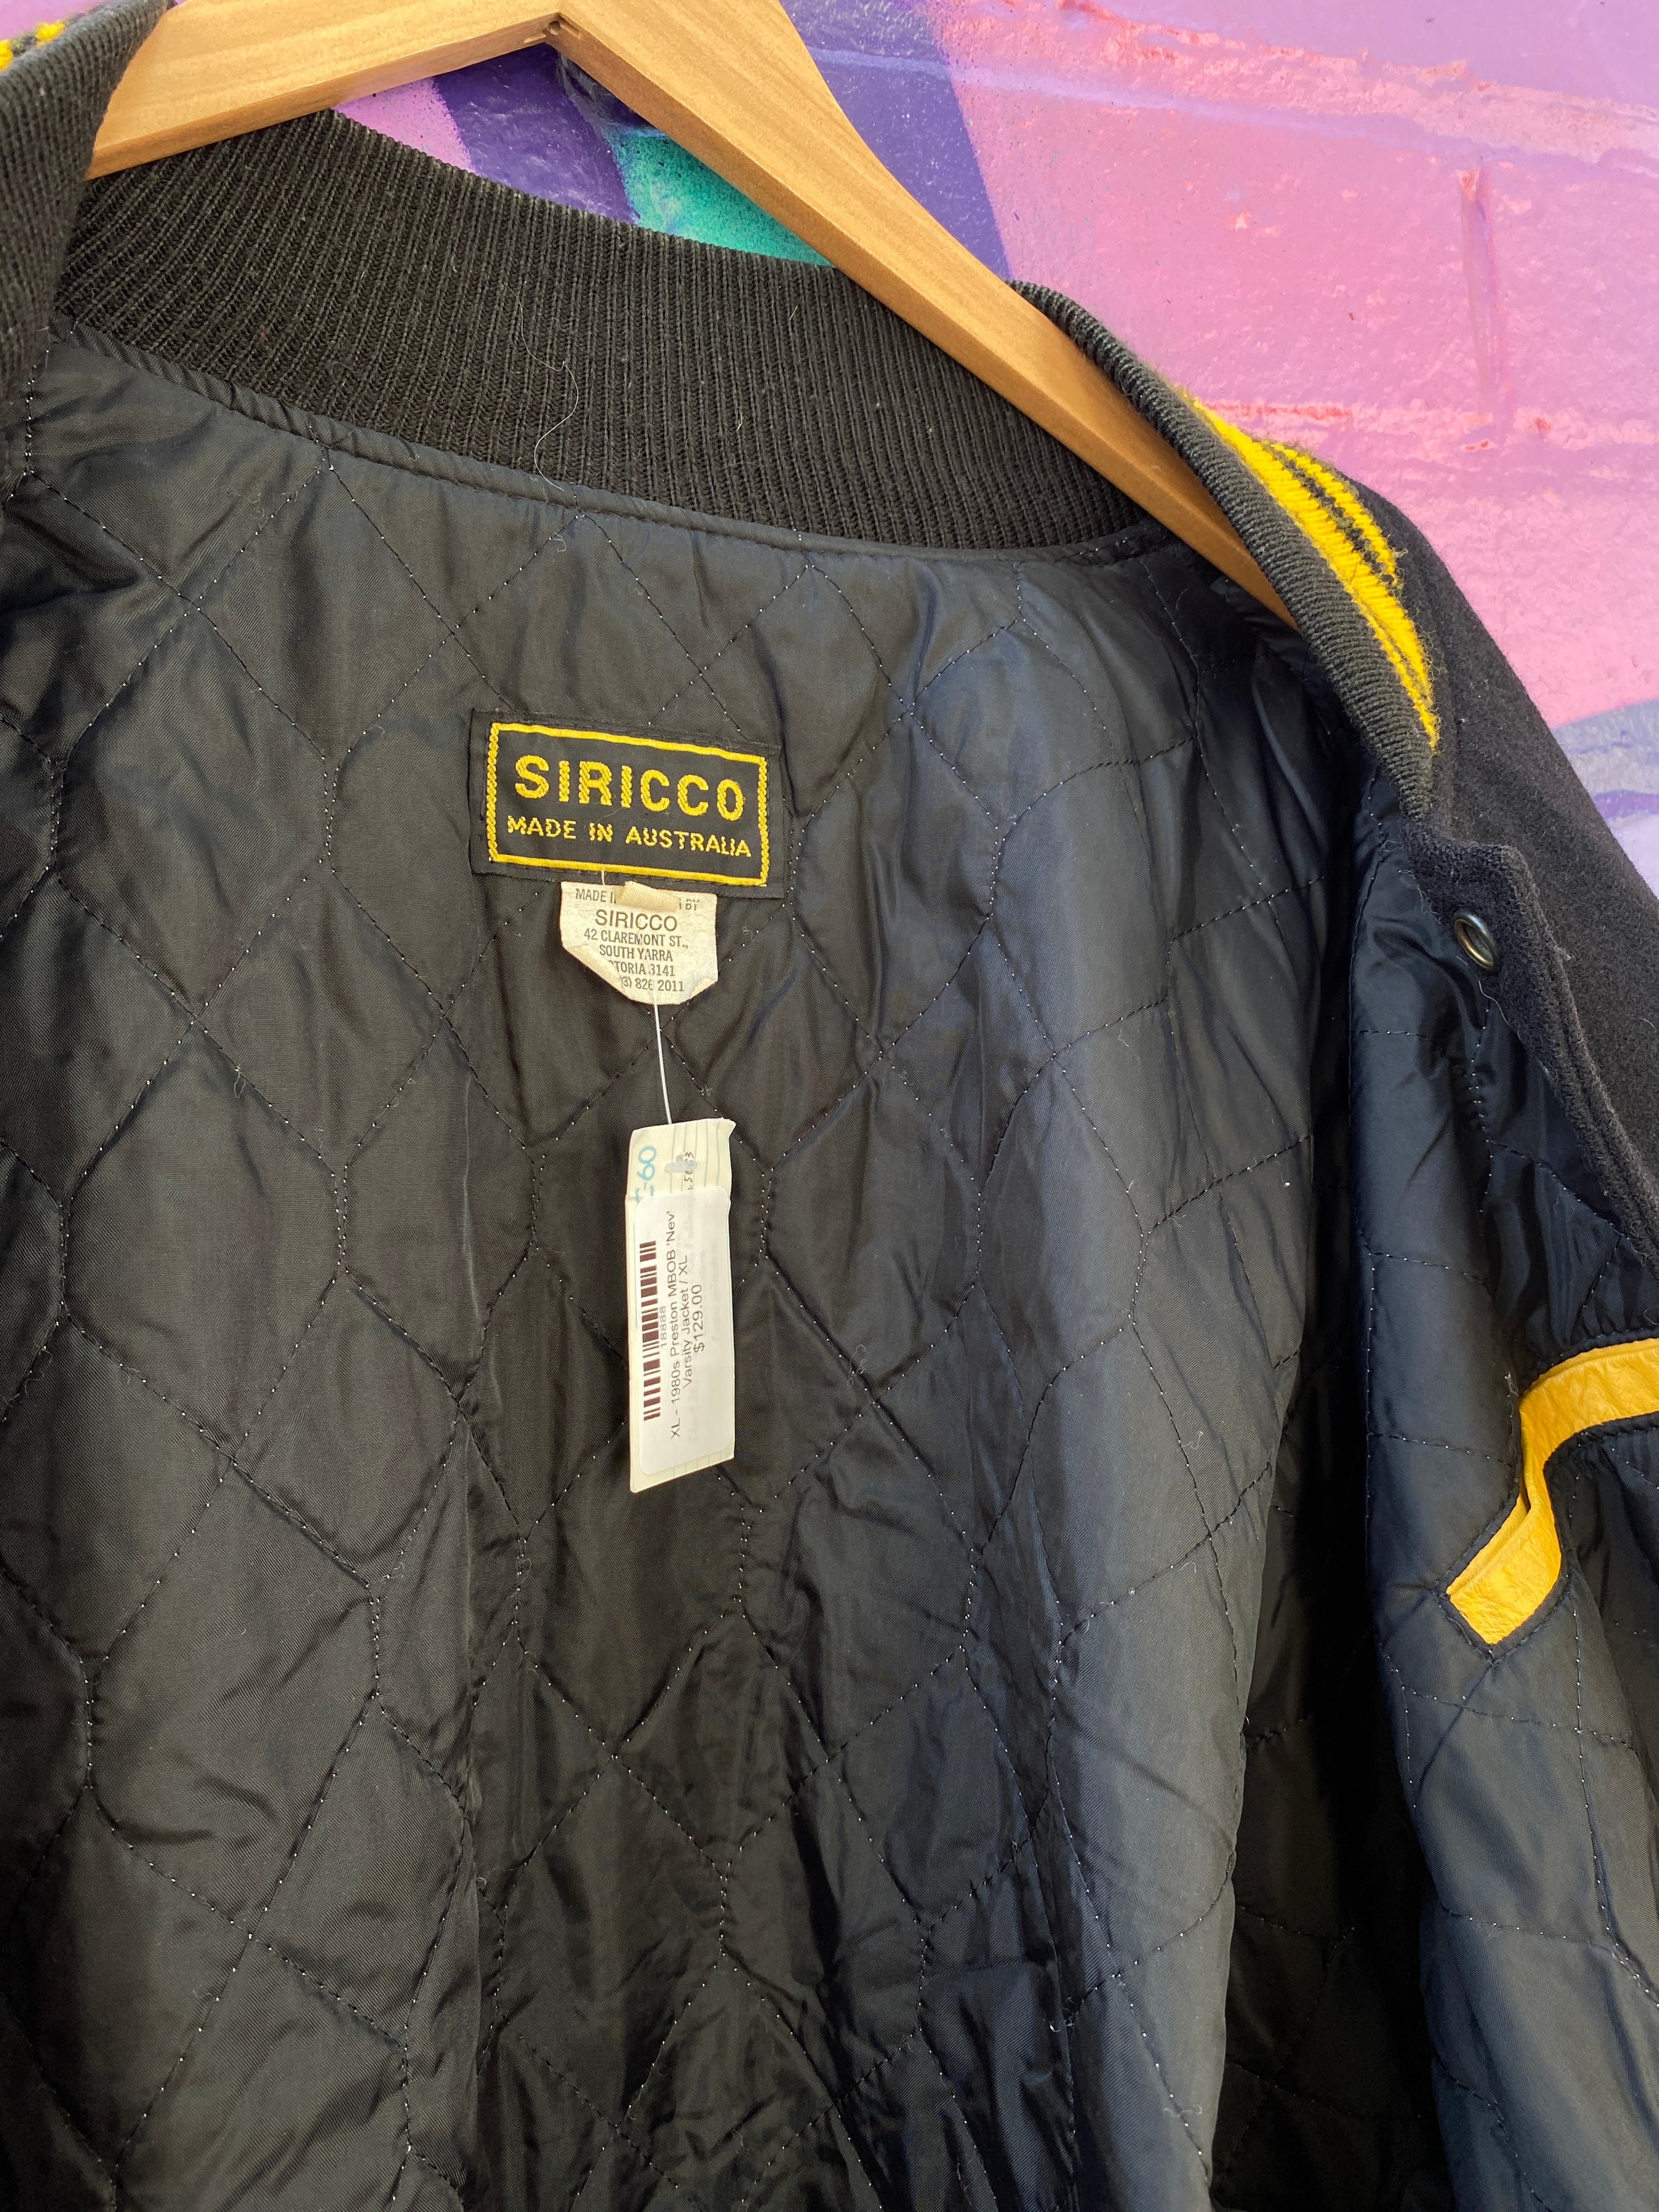 XL - 1980s Preston MBOB 'Nev' Varsity Jacket